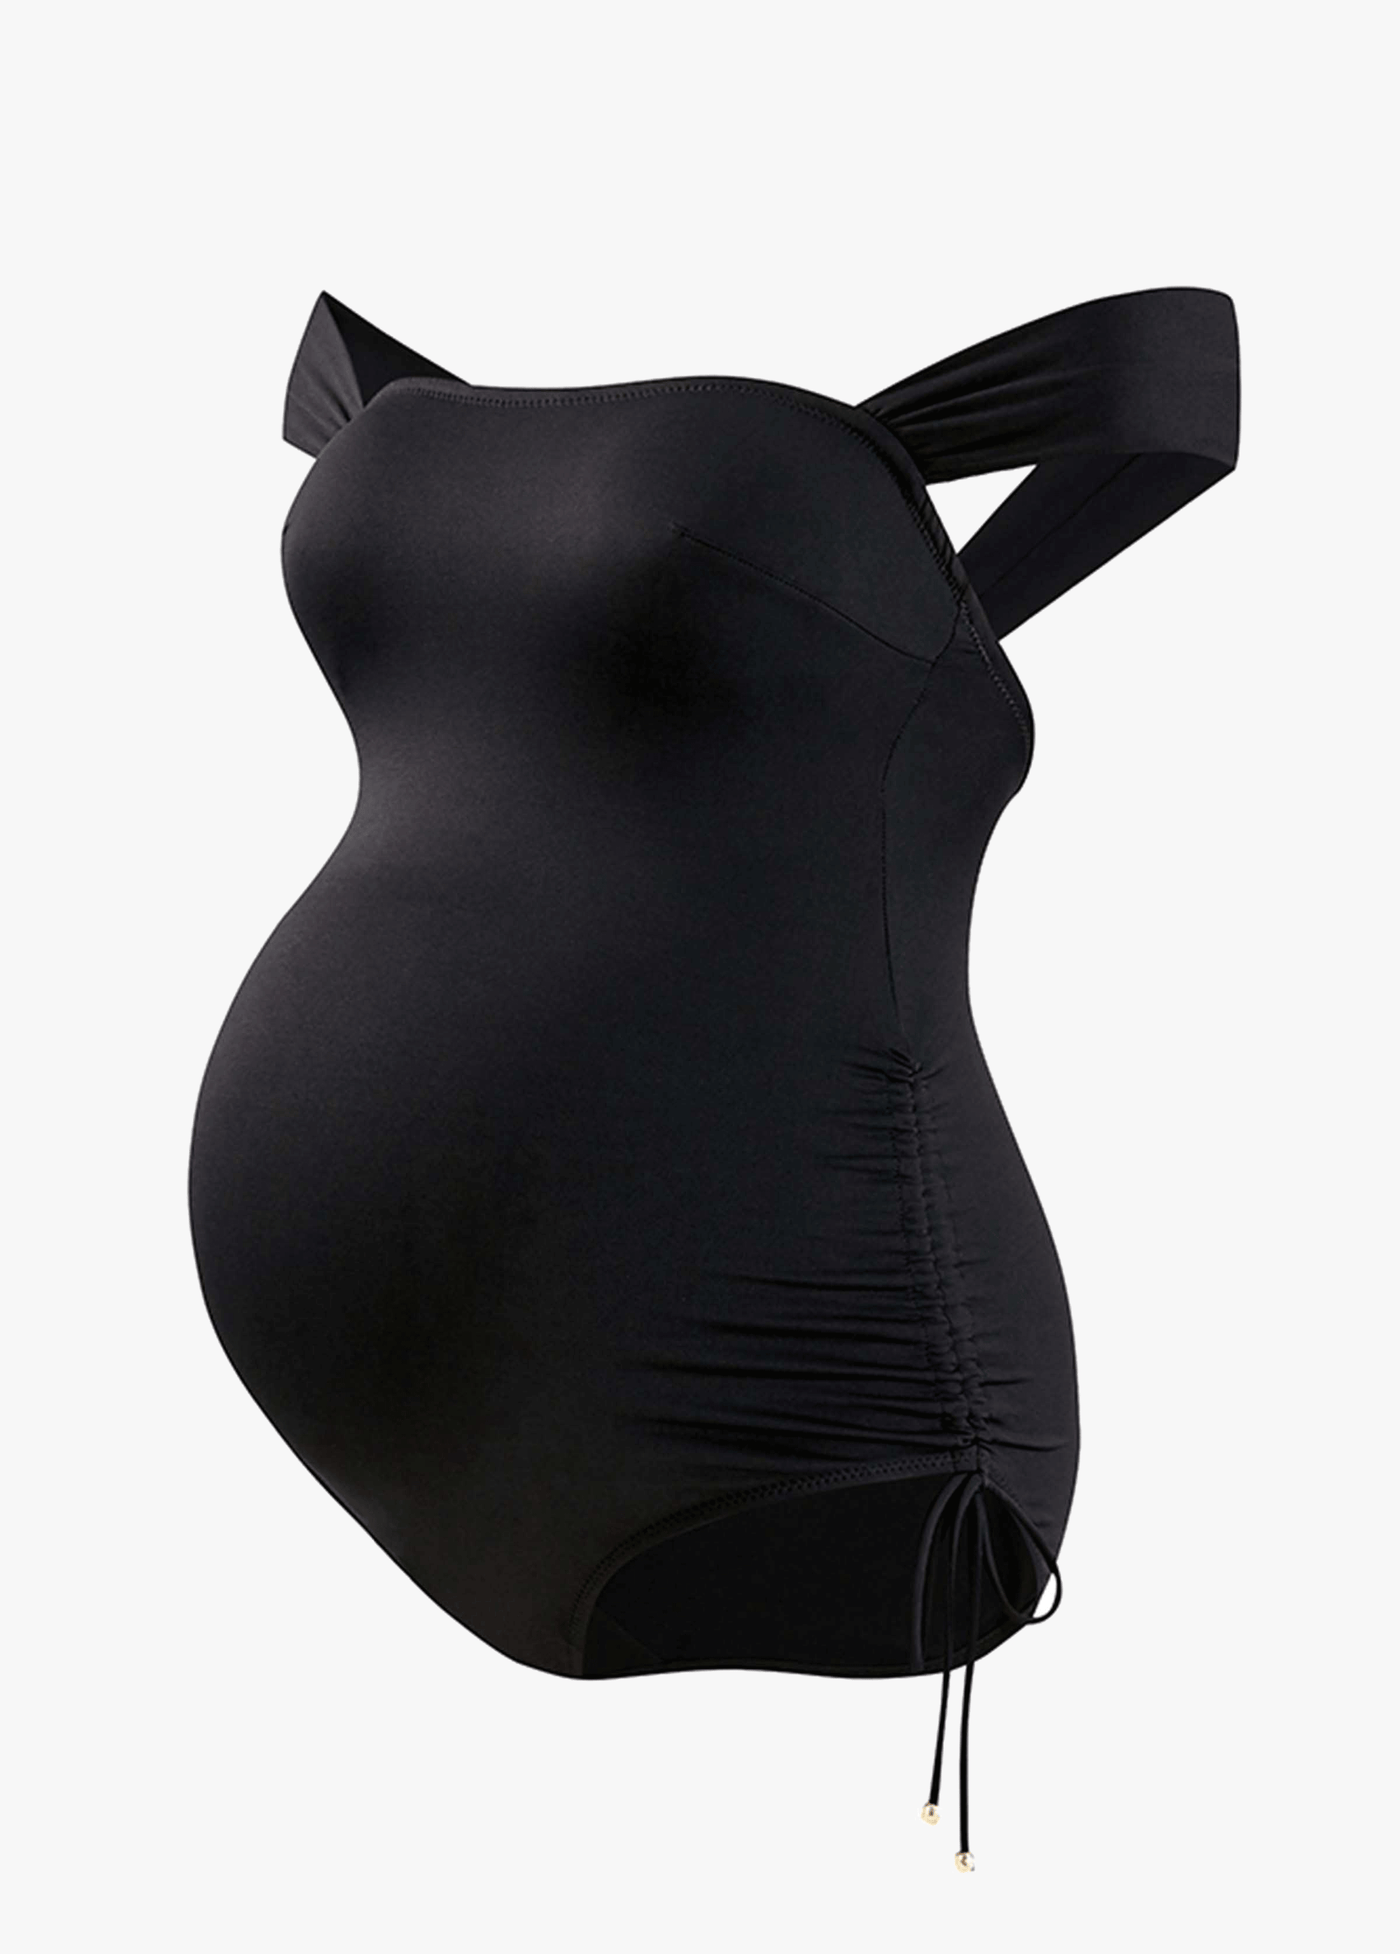 Maternity Swimsuit Maldives Violet, 57% OFF